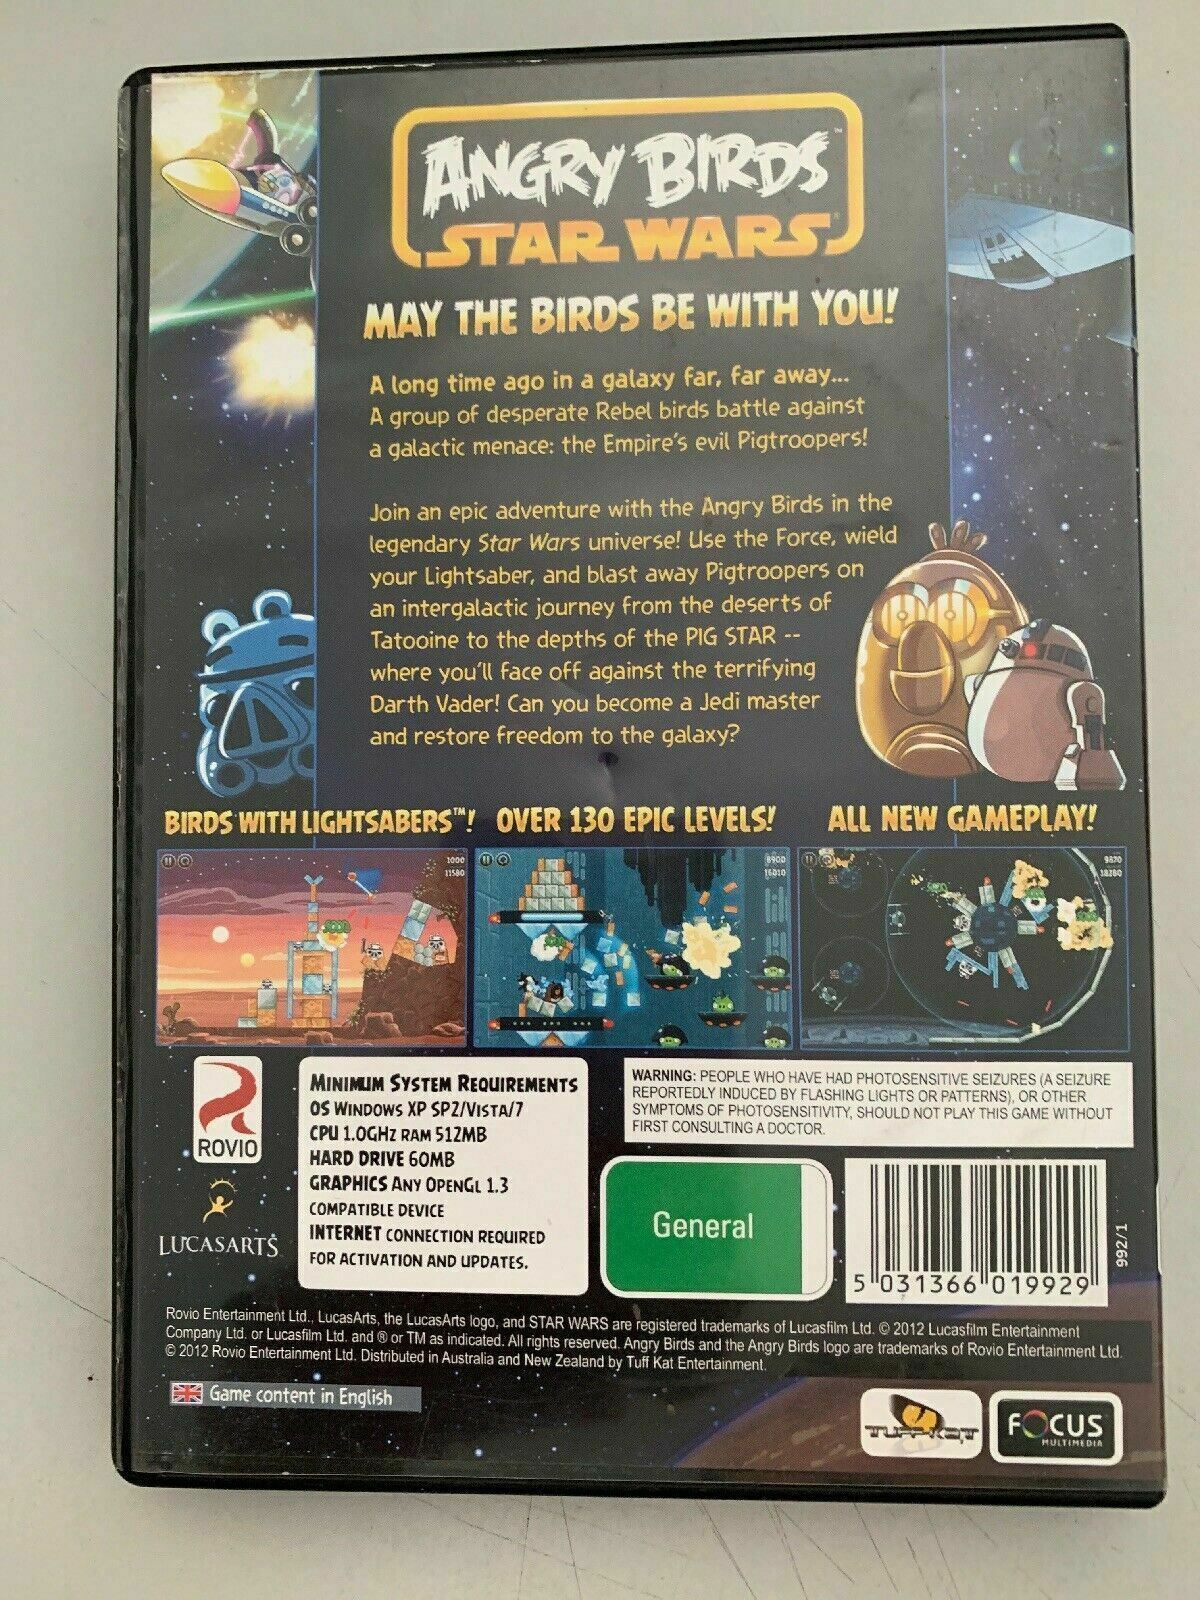 Angry Birds Star Wars - PC CD-ROM Windows Game